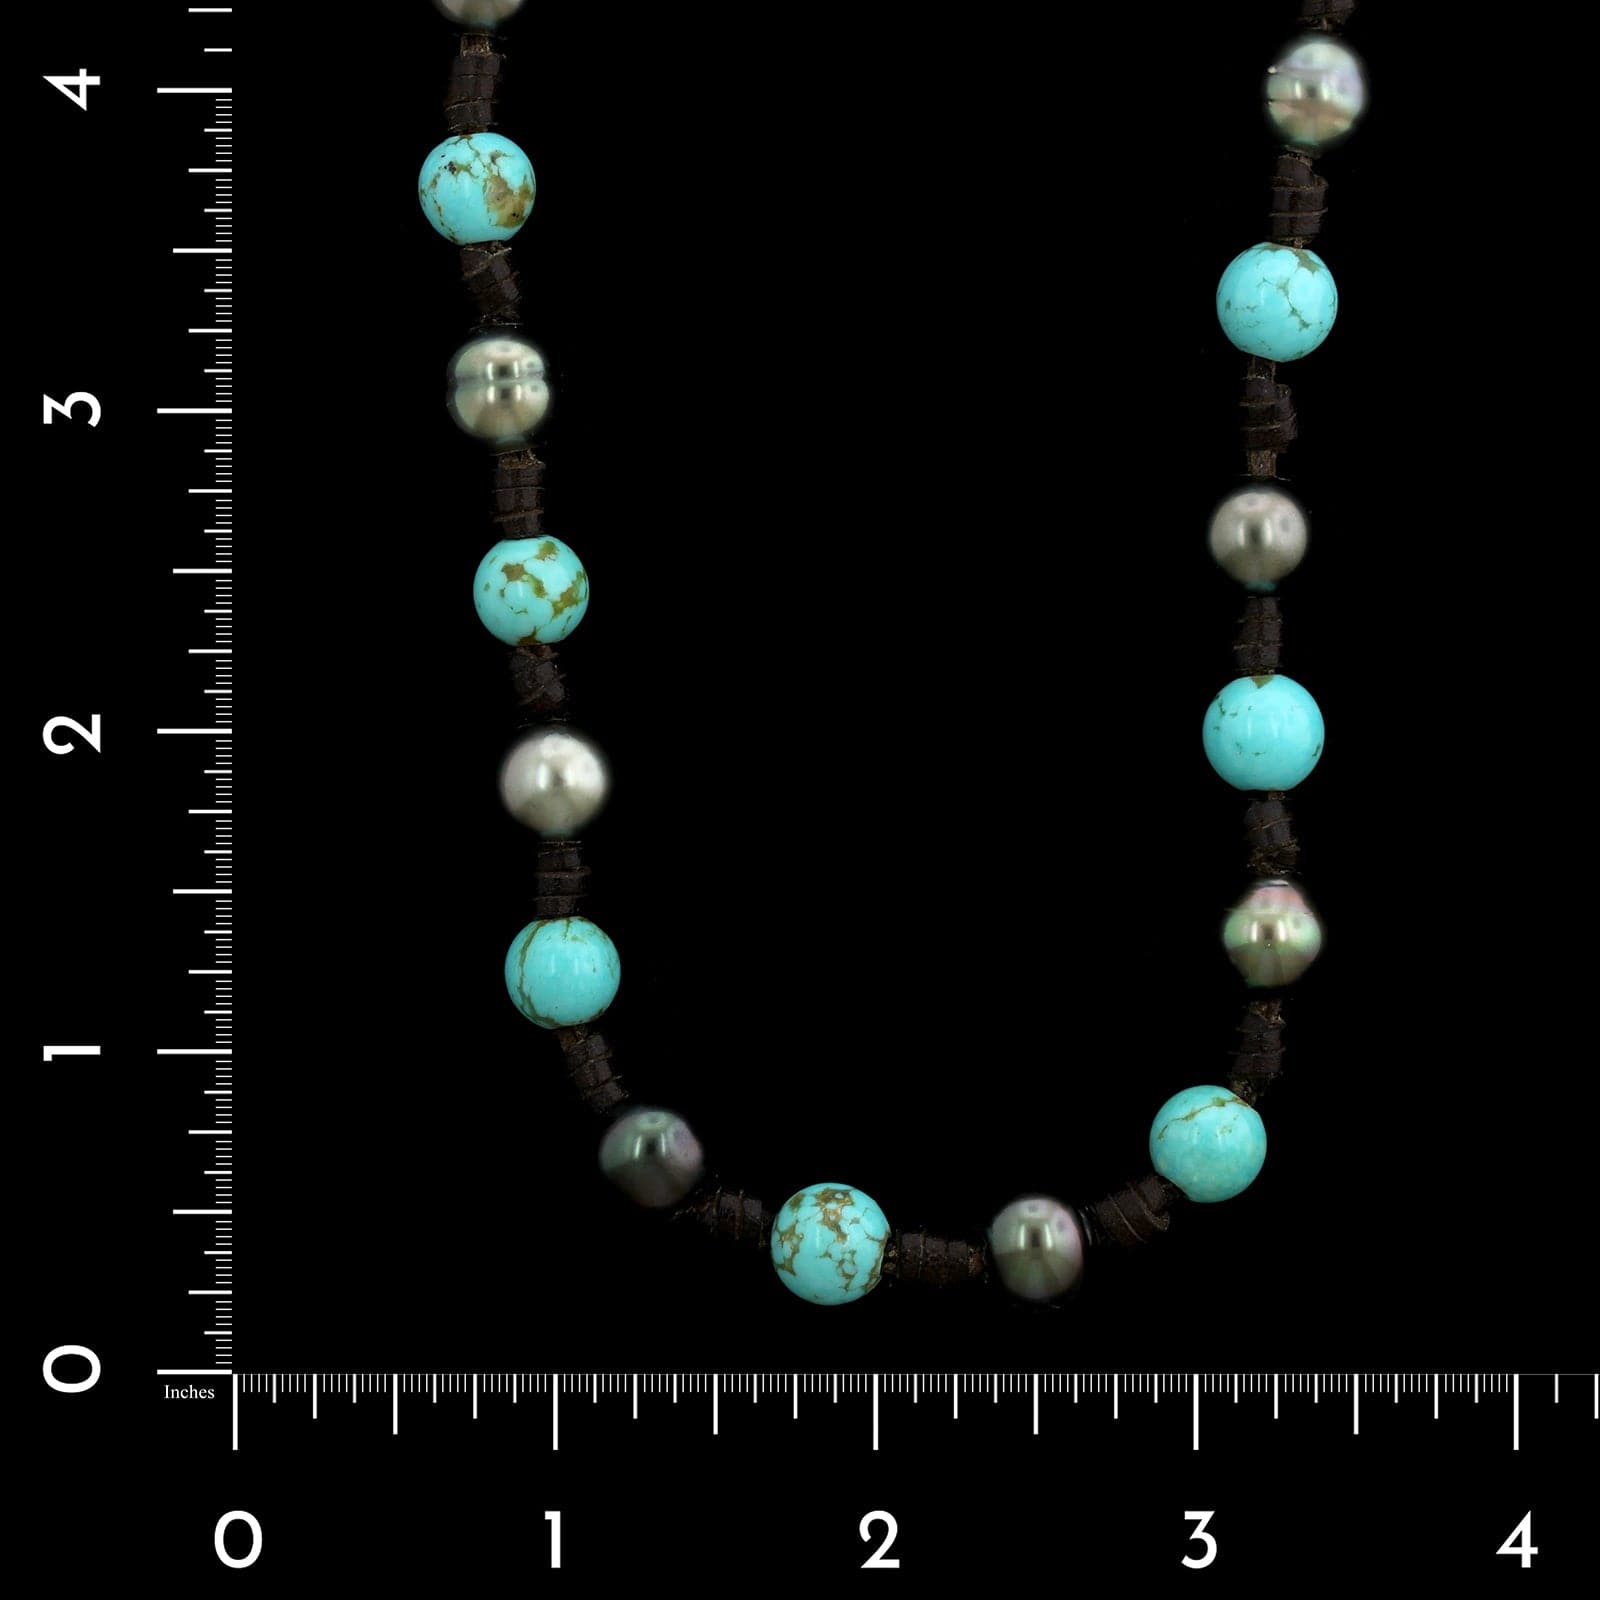 Trésors de St Barth - Black Tahitian pearls necklace from St Barth island !